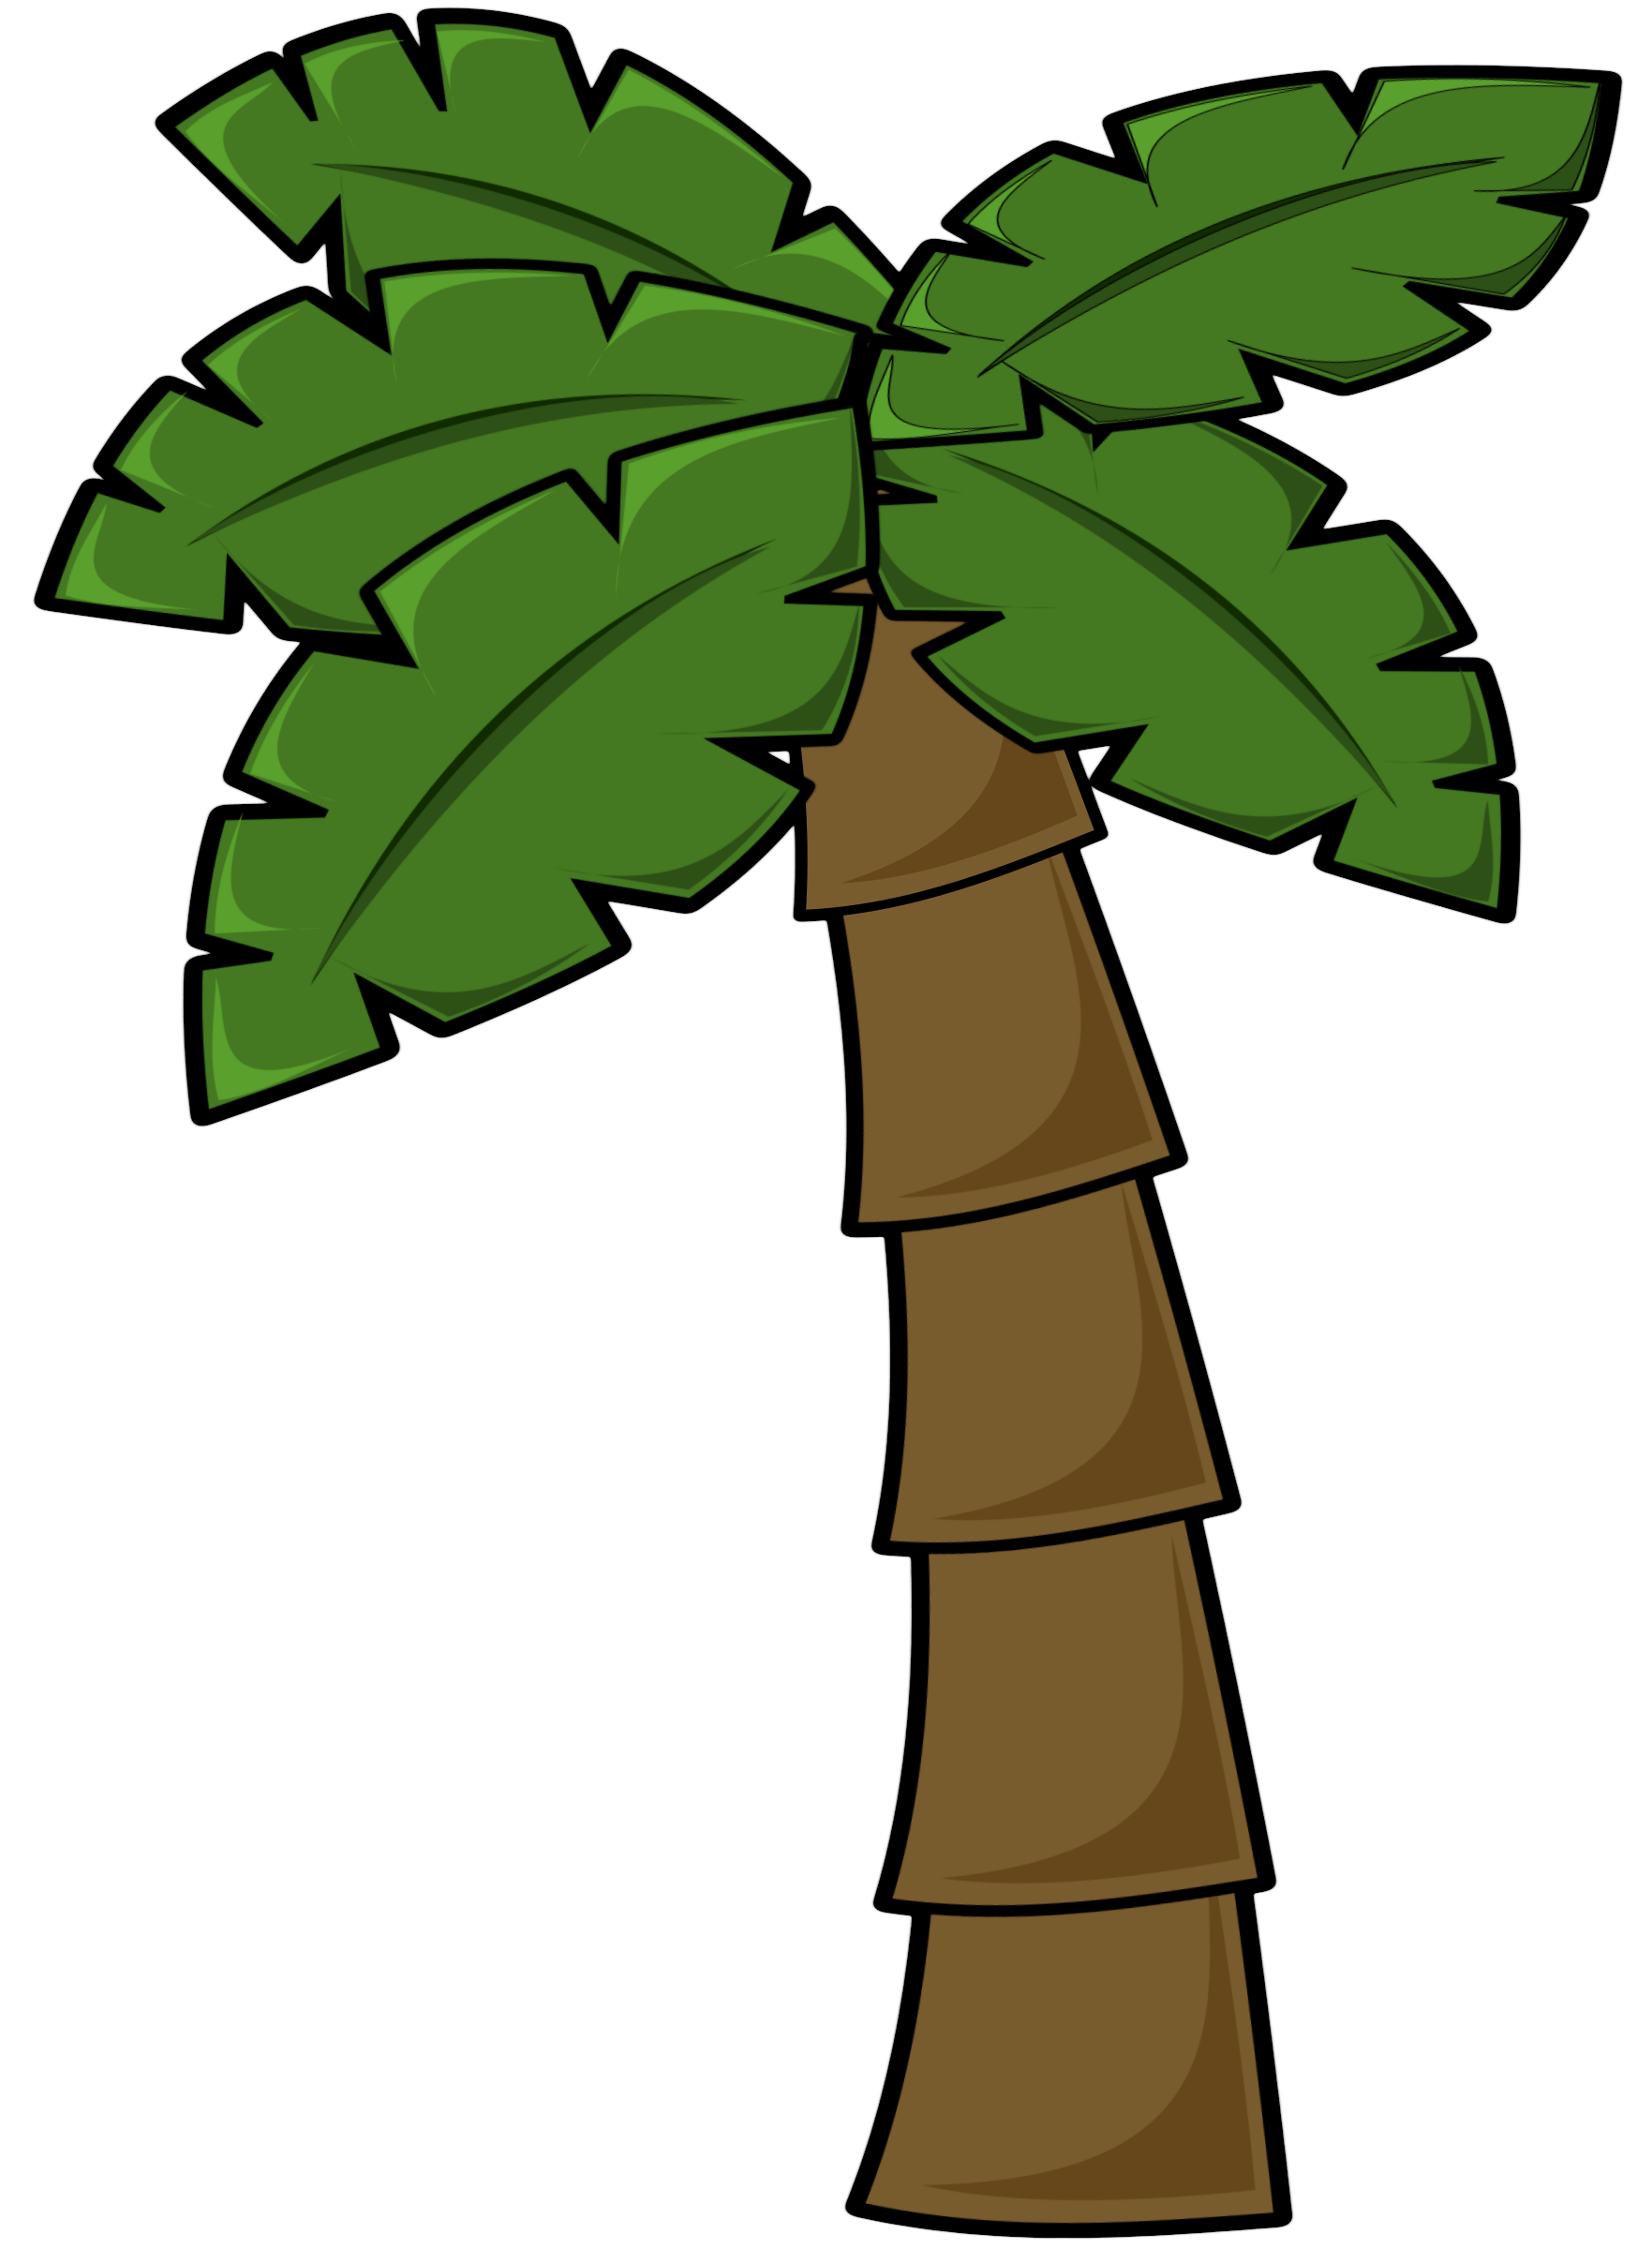 free vector clip art palm tree - photo #45